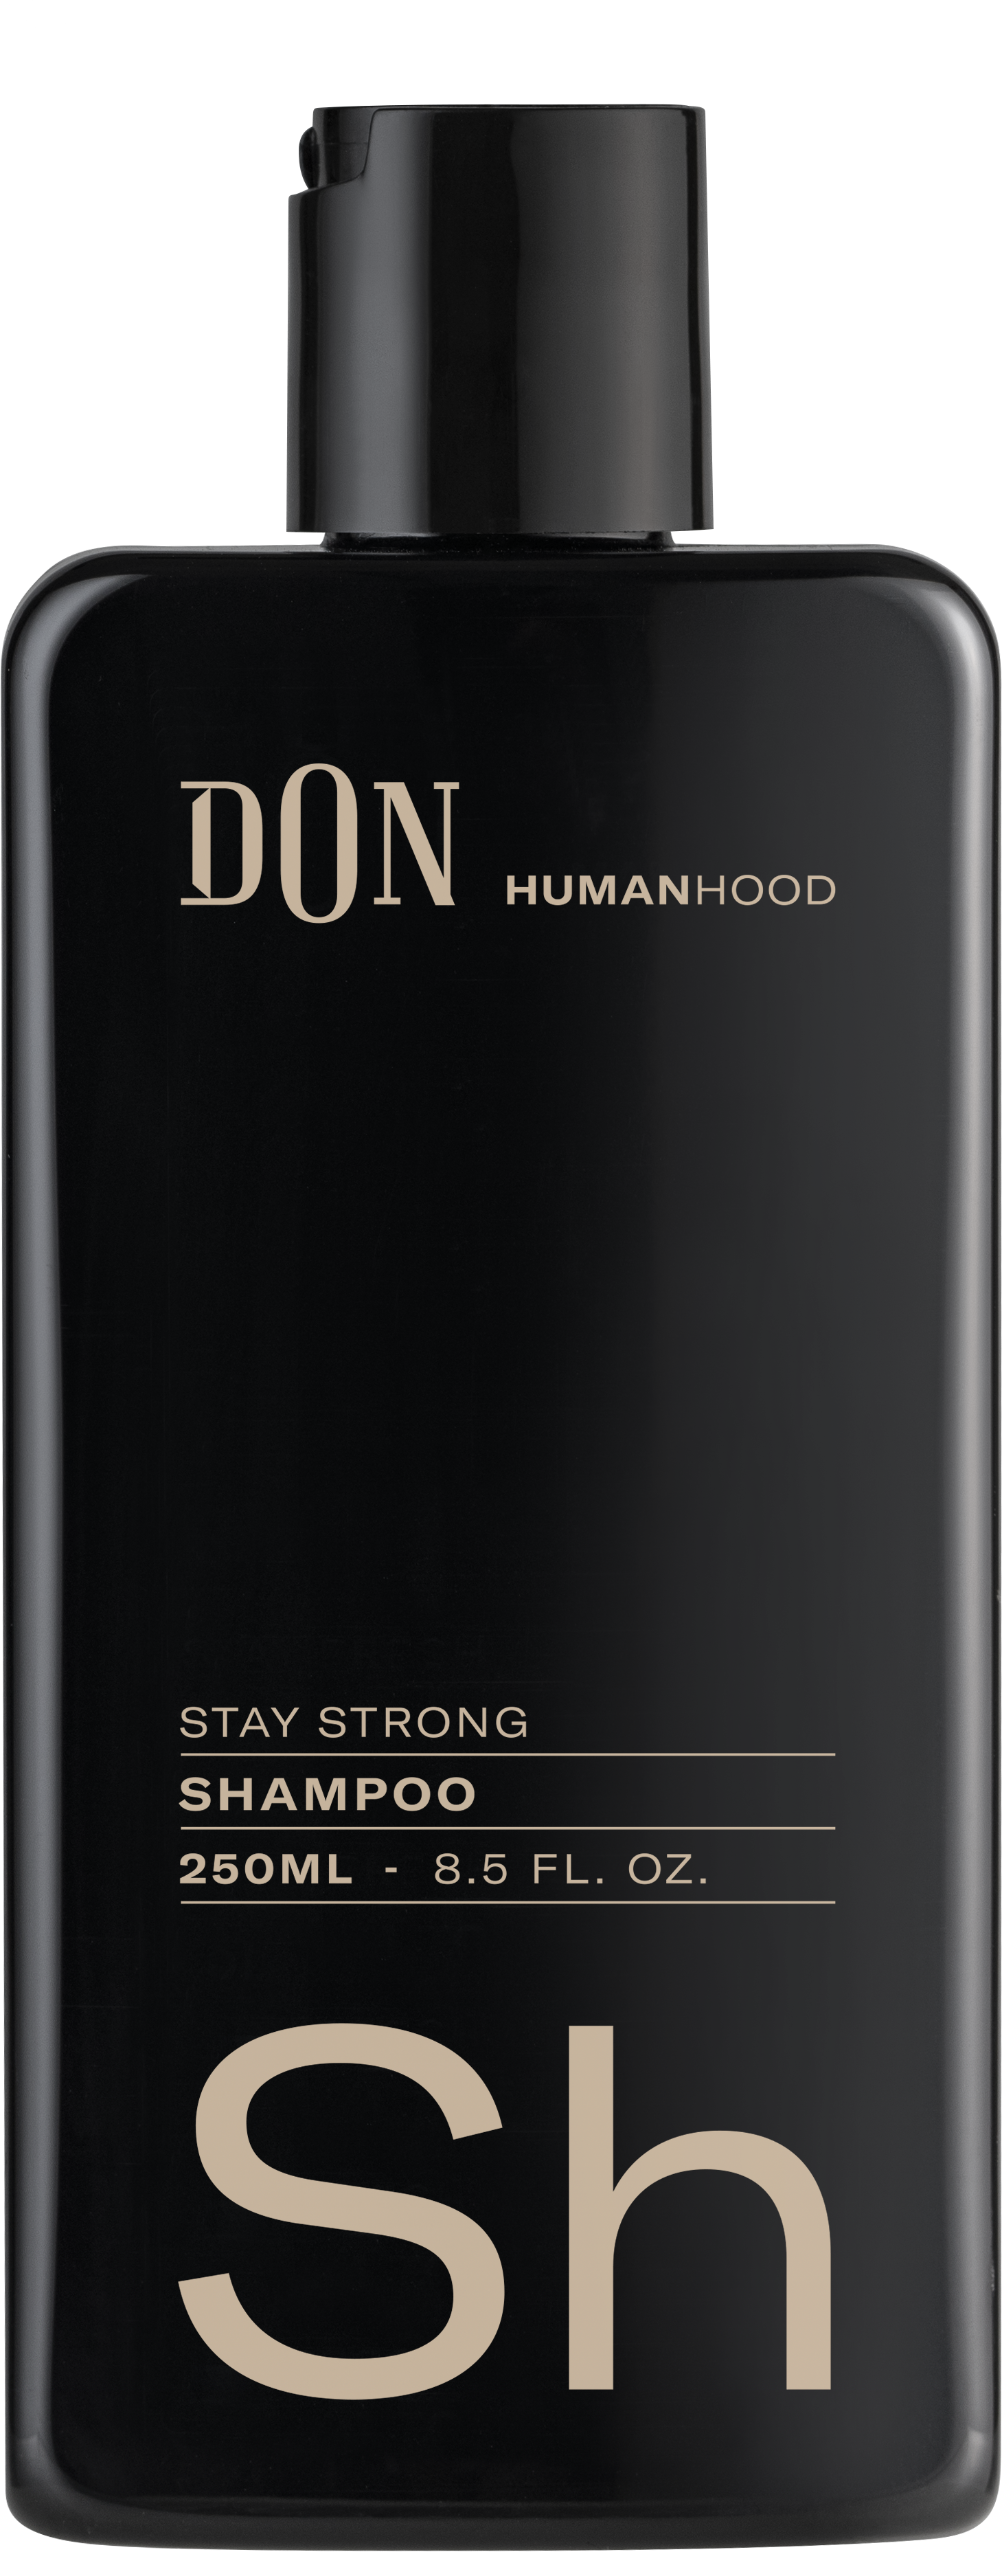 DON HUMANHOOD - Stay Strong Shampoo